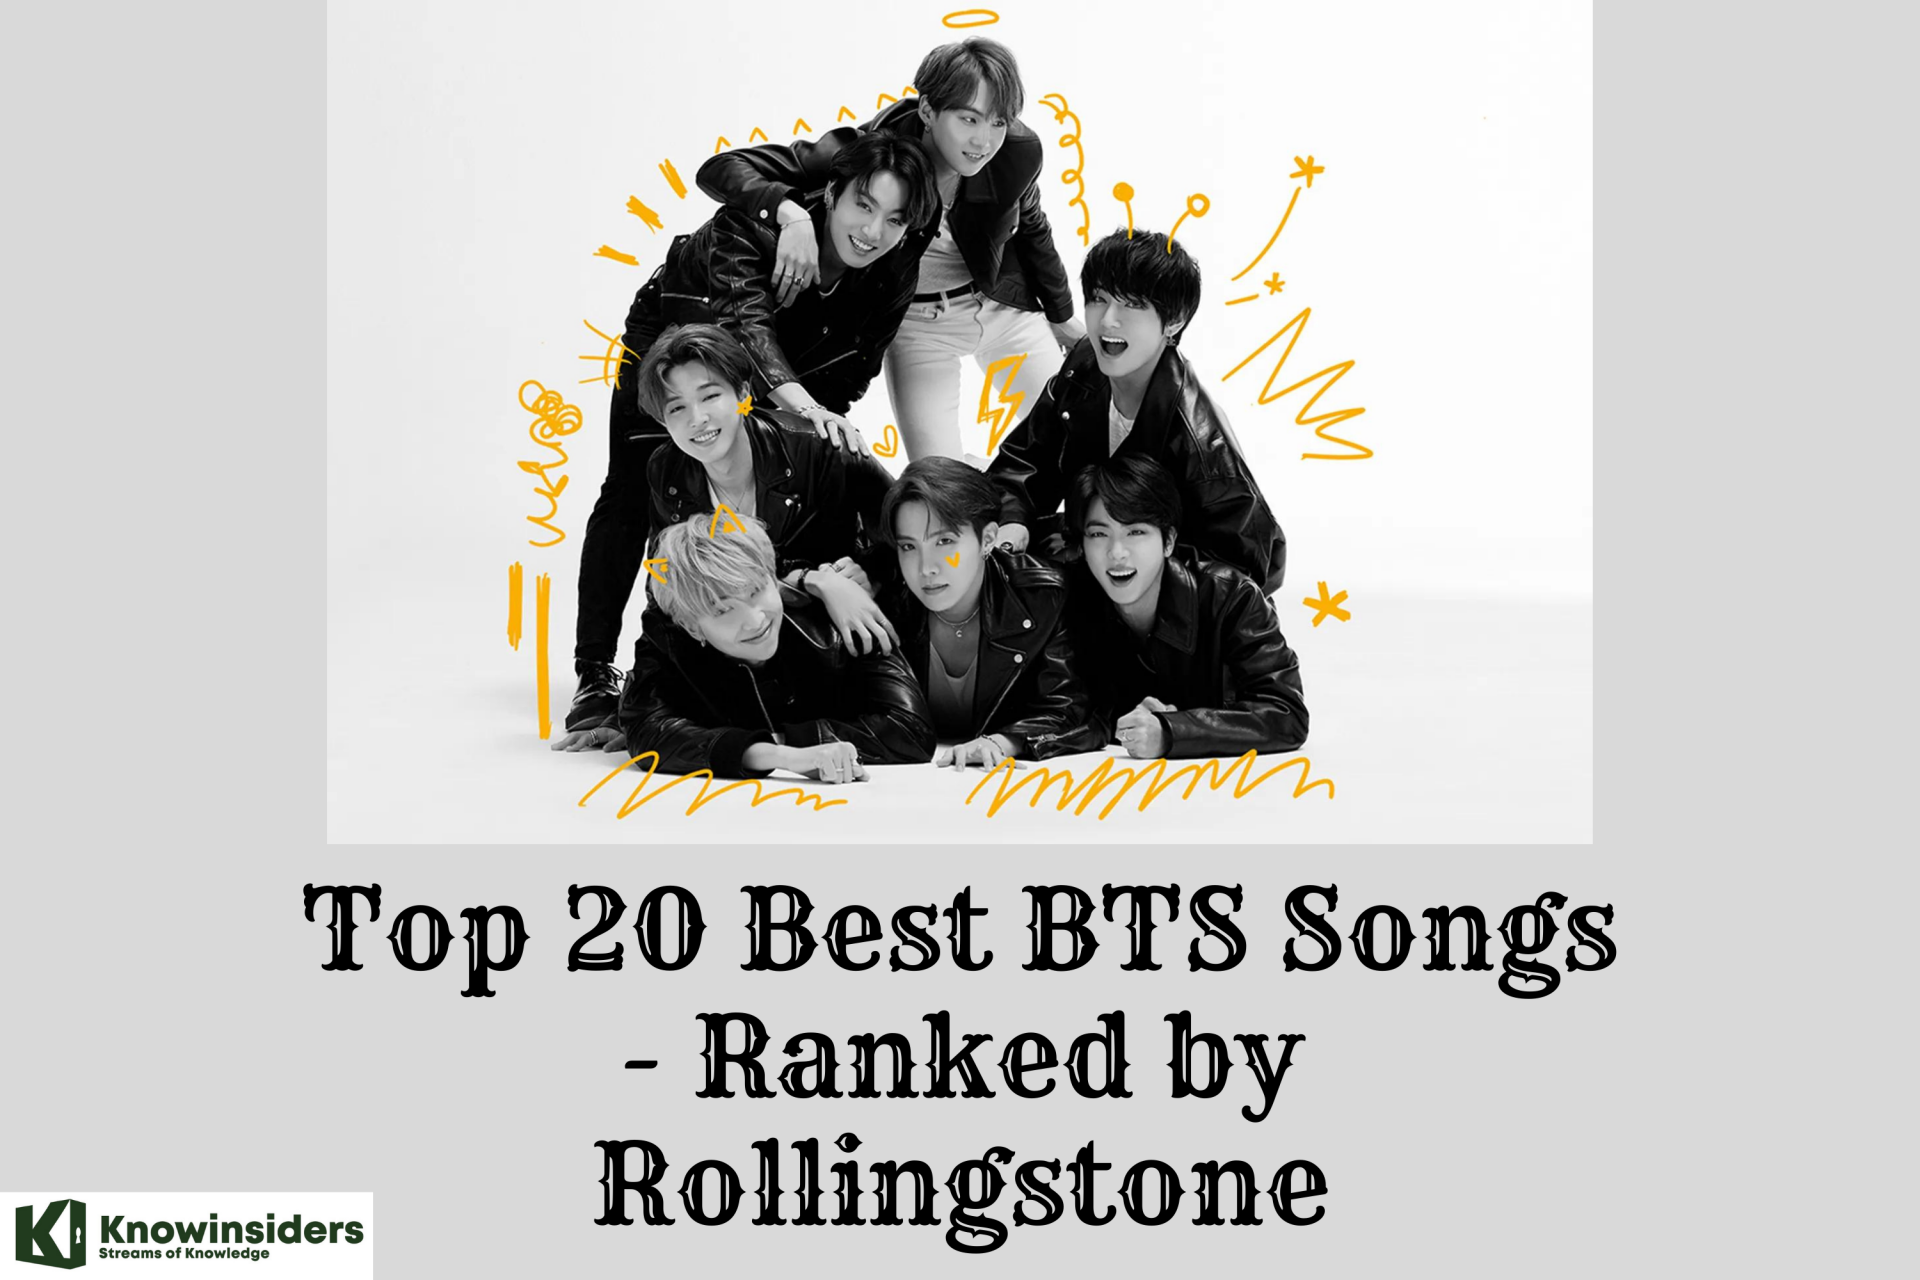 Top 20 Best BTS Songs - Ranked by Rollingstone